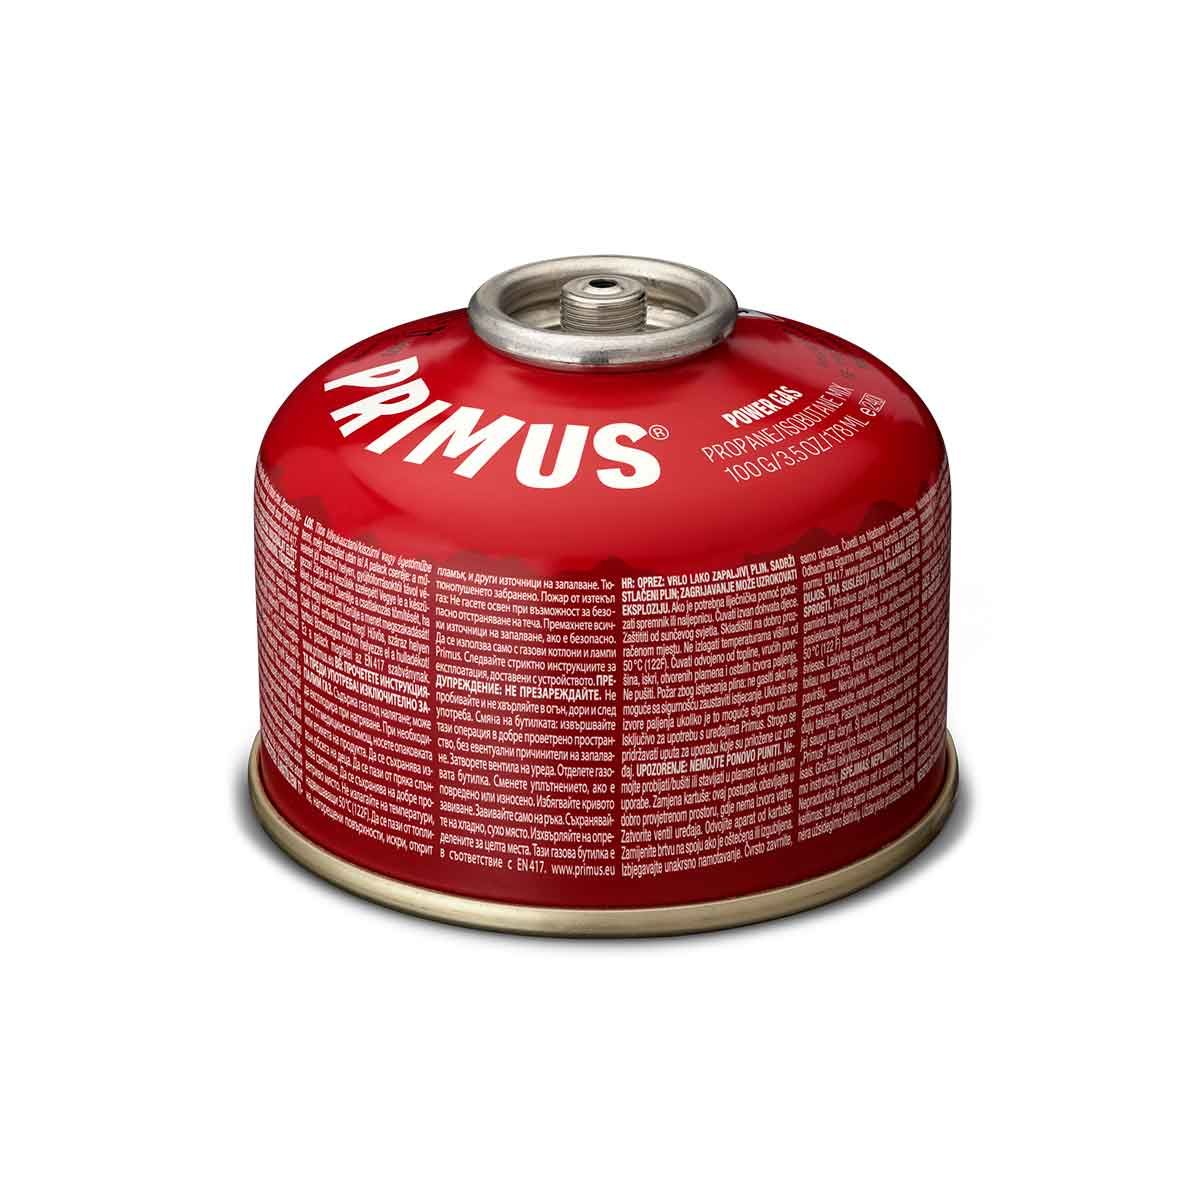 Cartouche de gaz Primus 230g